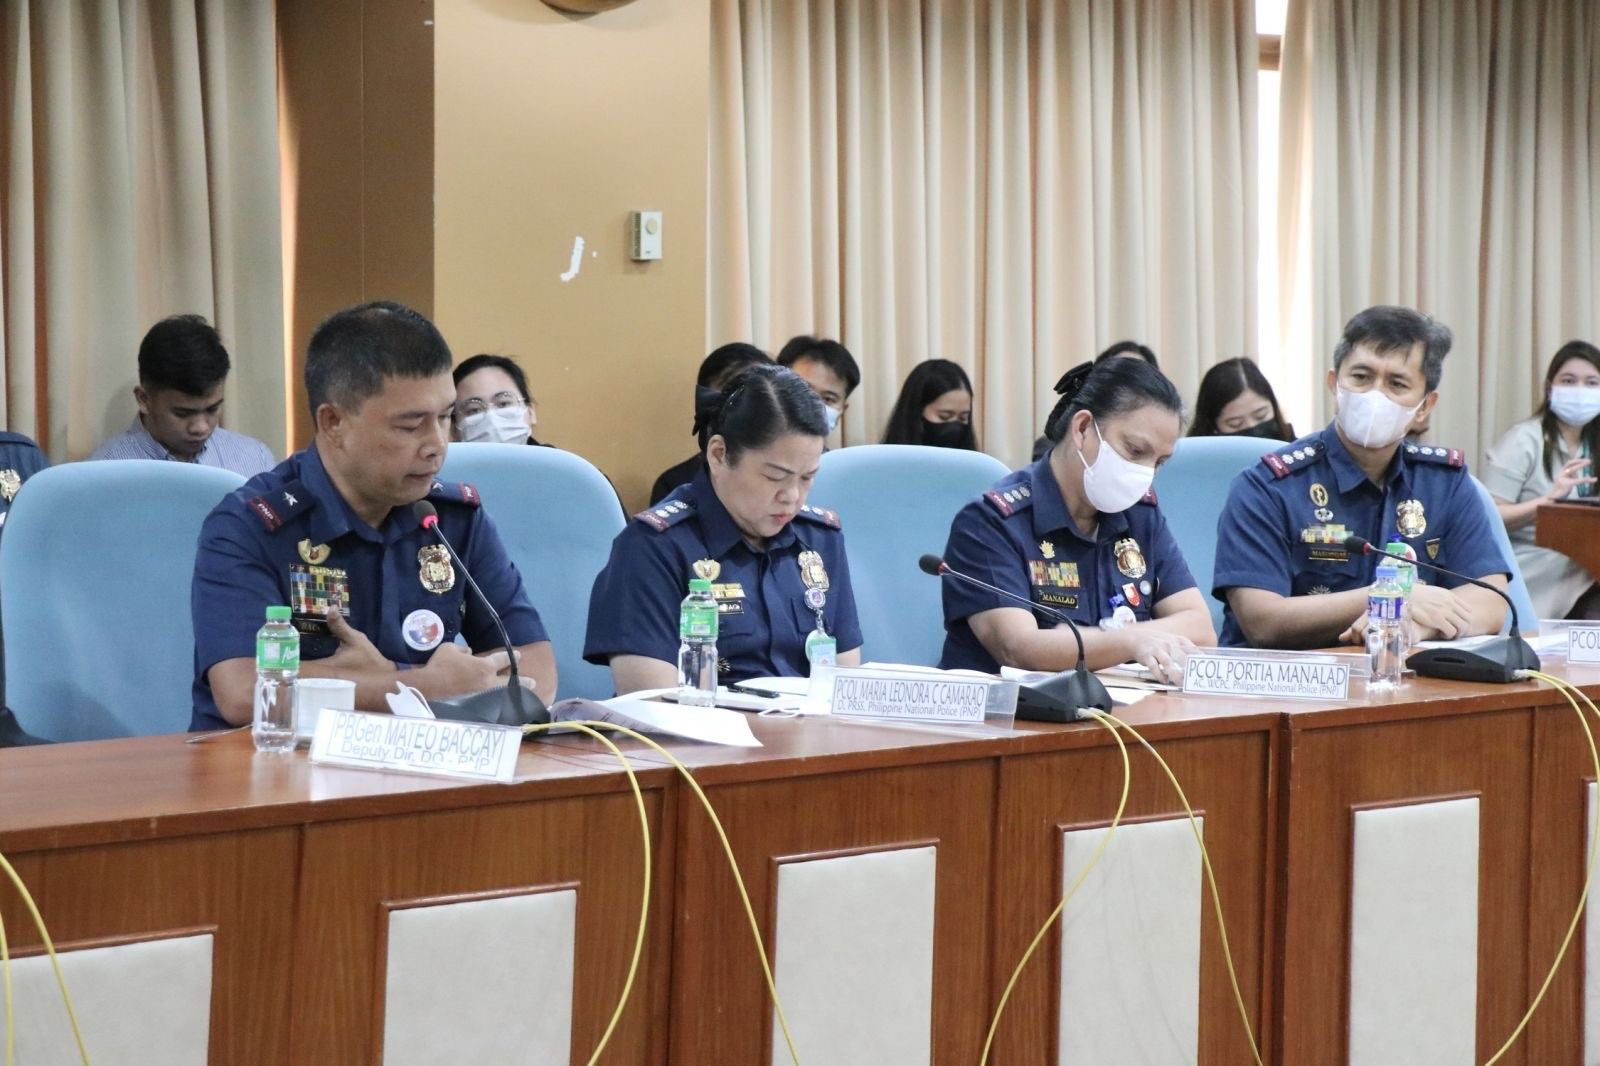 PNP mempertimbangkan untuk menyediakan lebih banyak personel keamanan bagi pejabat setempat